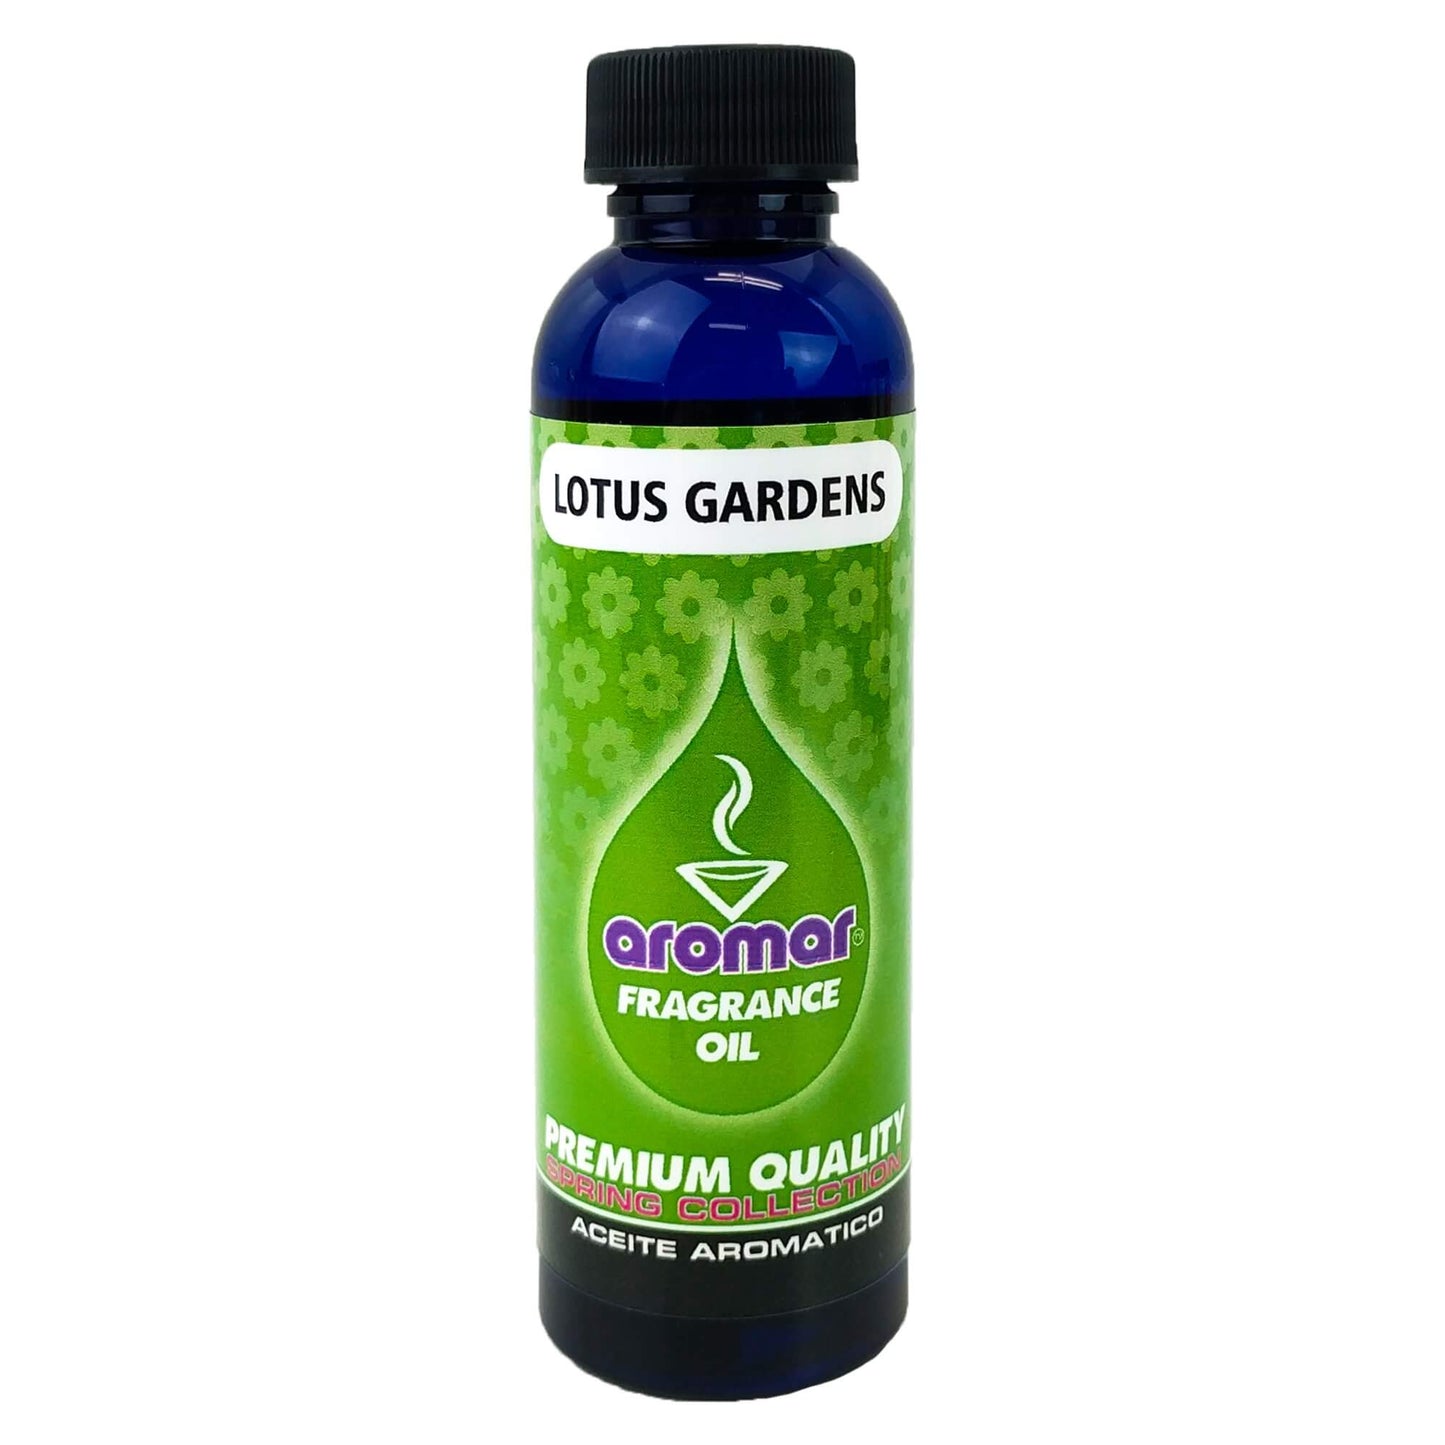 Lotus Gardens Scent Aromar Fragrance Oil, 2oz/60ml